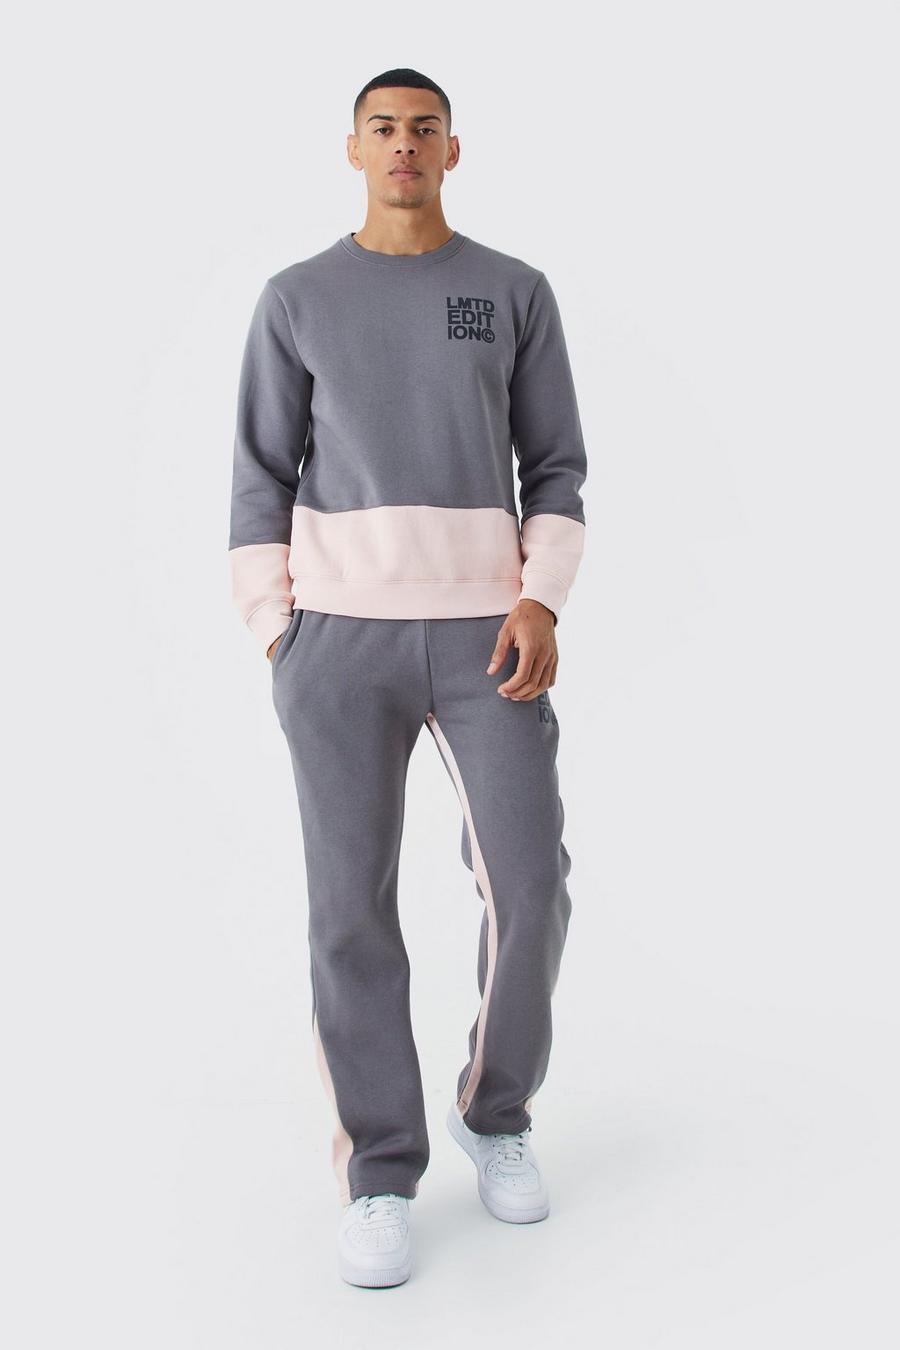 Limited Edition Slim-Fit Colorblock Trainingsanzug, Charcoal